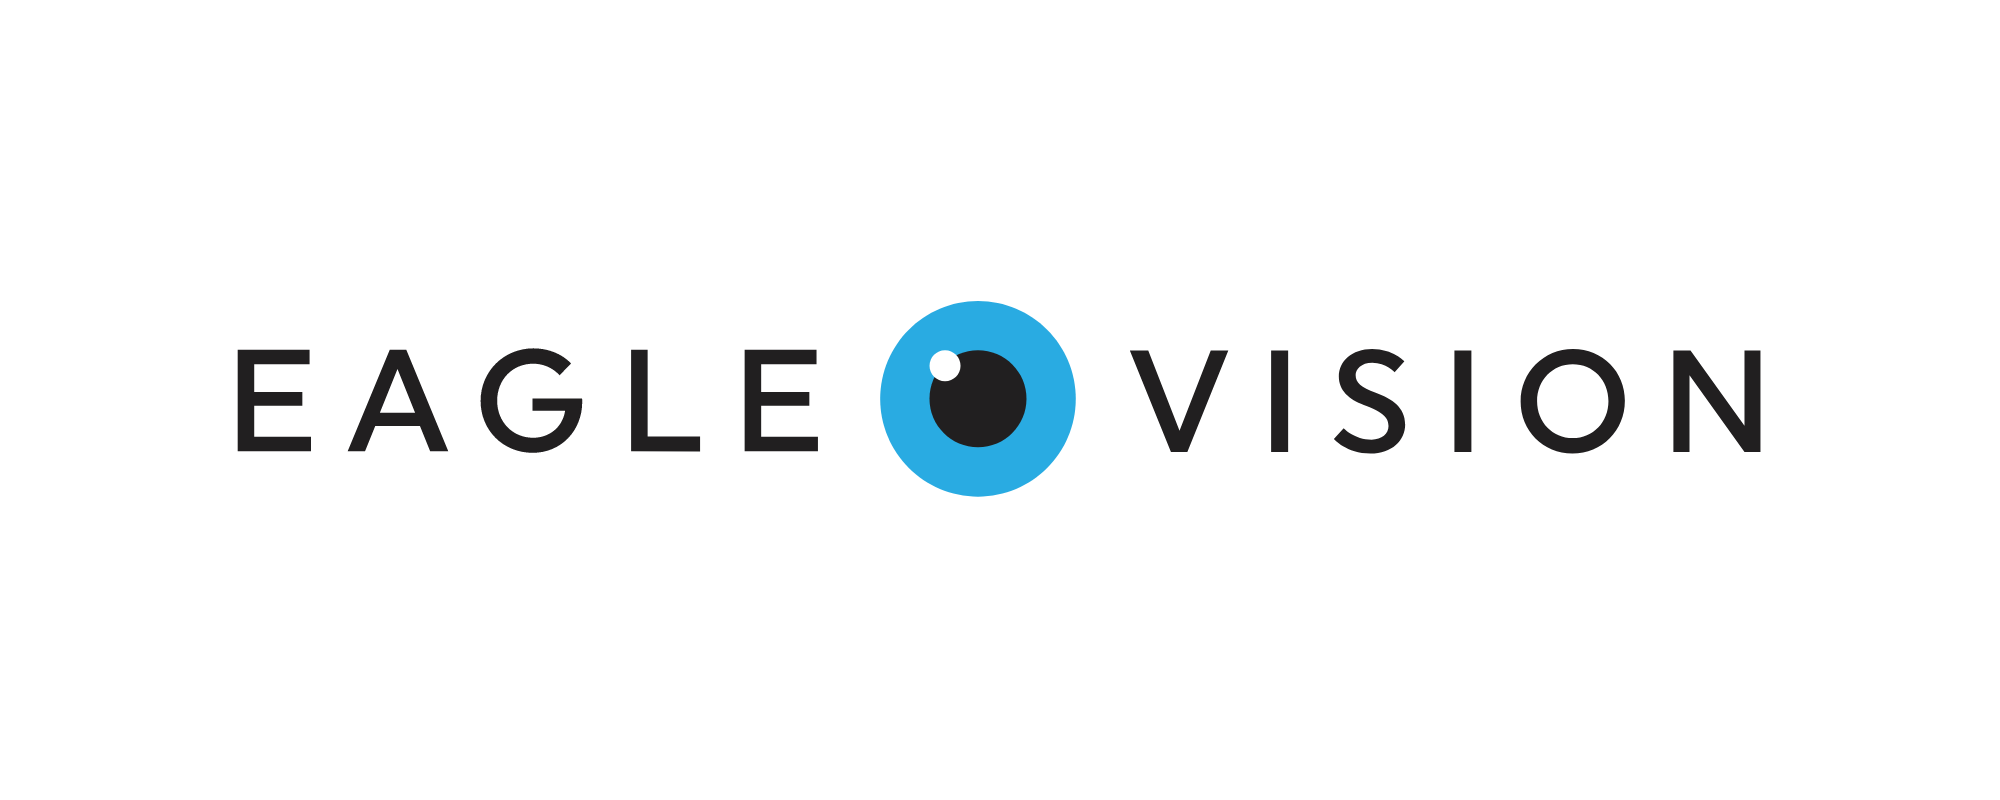 eagle-vision-logo